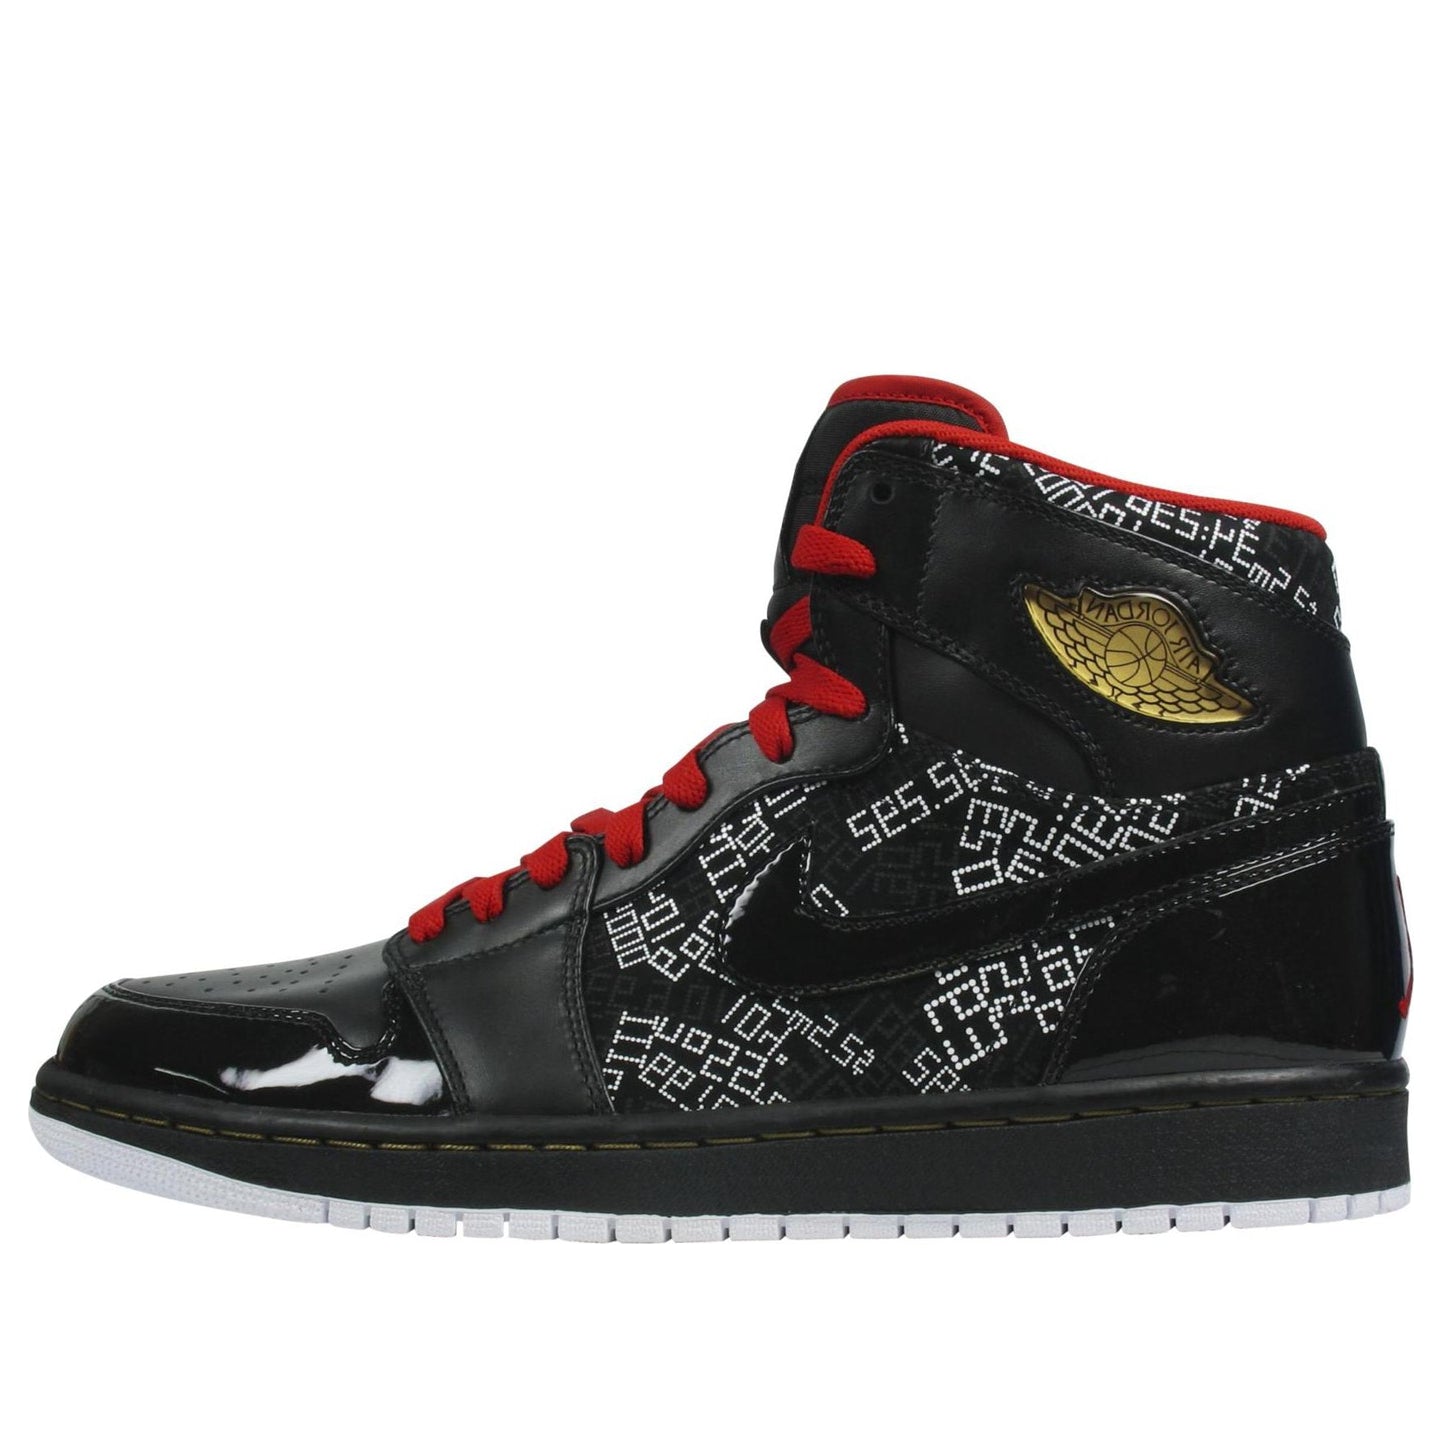 Air Jordan 1 High Hof 'Hall Of Fame' Black/Varsity Red-Wht-Mtllc Gld 371498-012